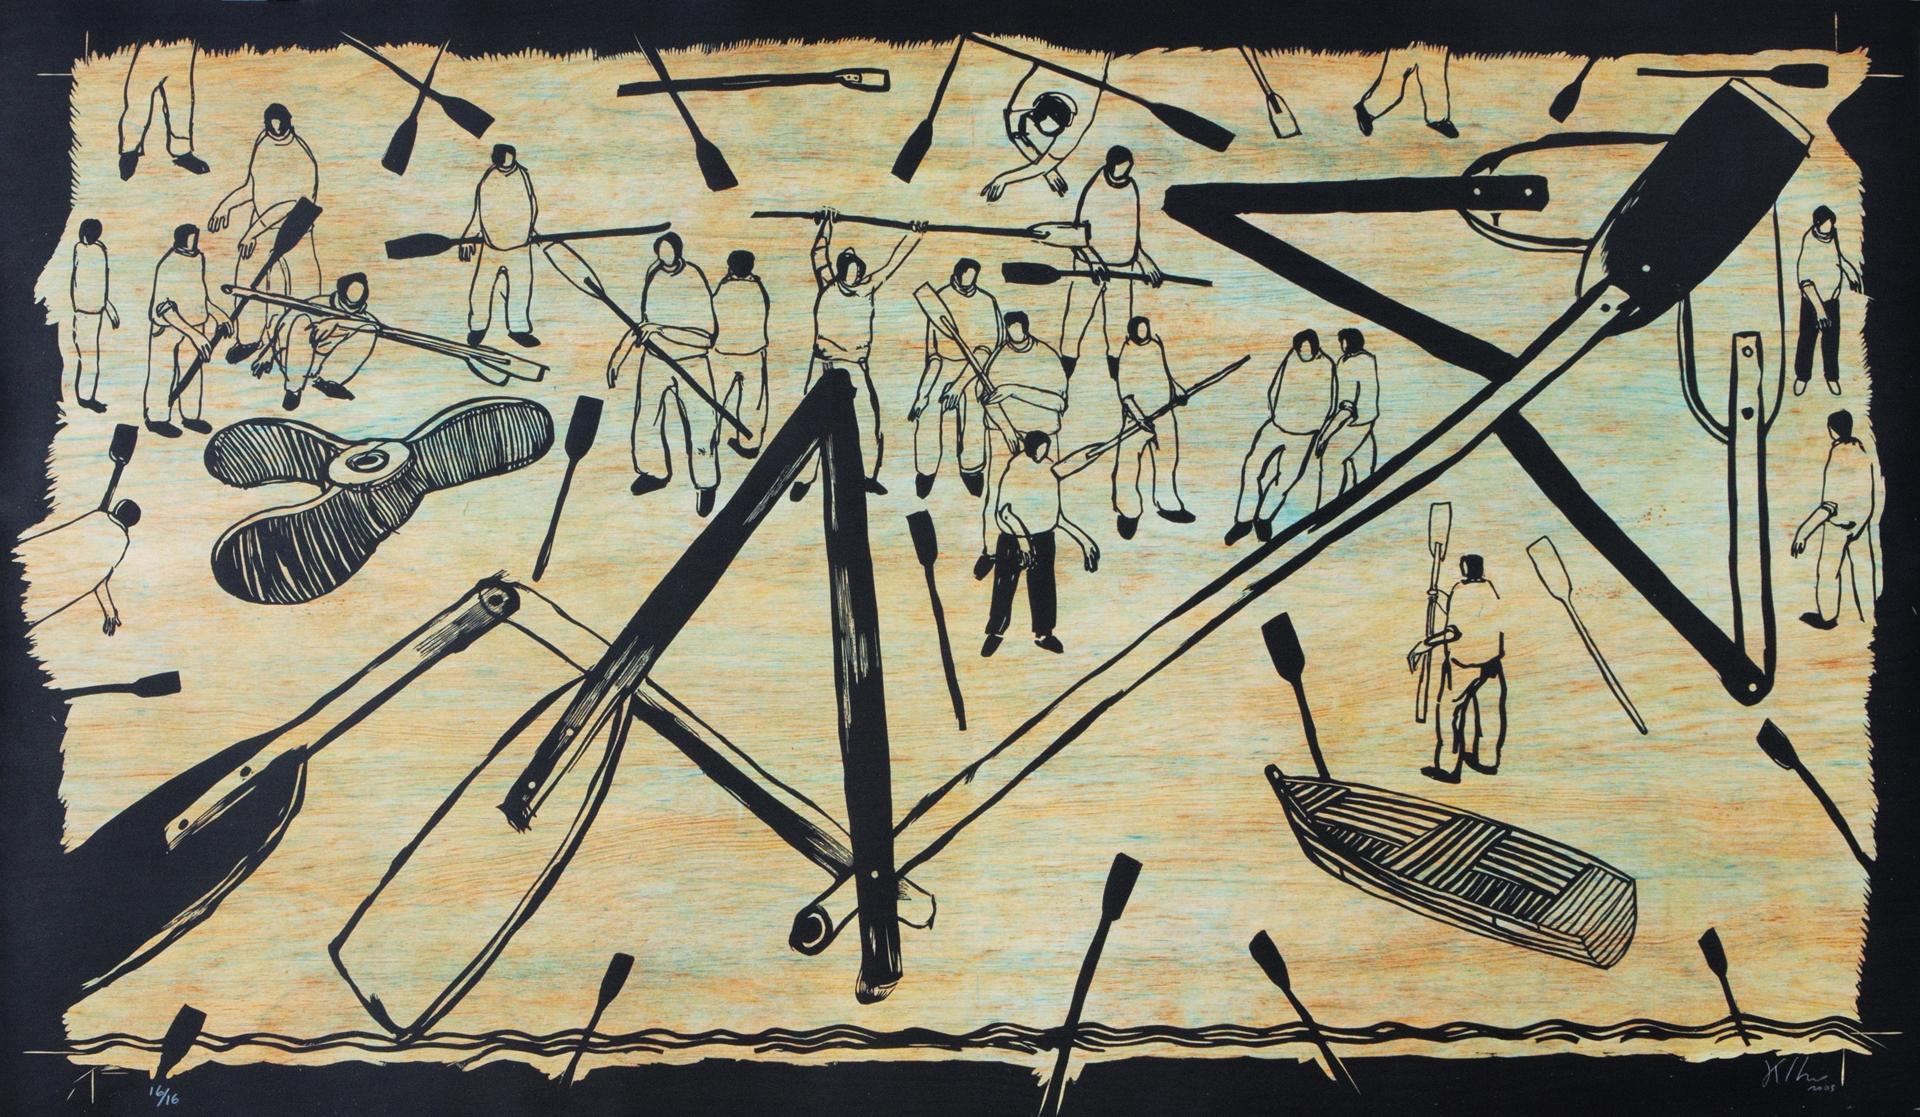 Alexis Kcho Leiva (Cuba, 1970)
'Untitled', 2005
woodcut on paper Velin Arches 300 g.
45.9 x 78.4 in. (116.5 x 199 cm.)
Edition of 30
ID: KCH-114
Unframed
